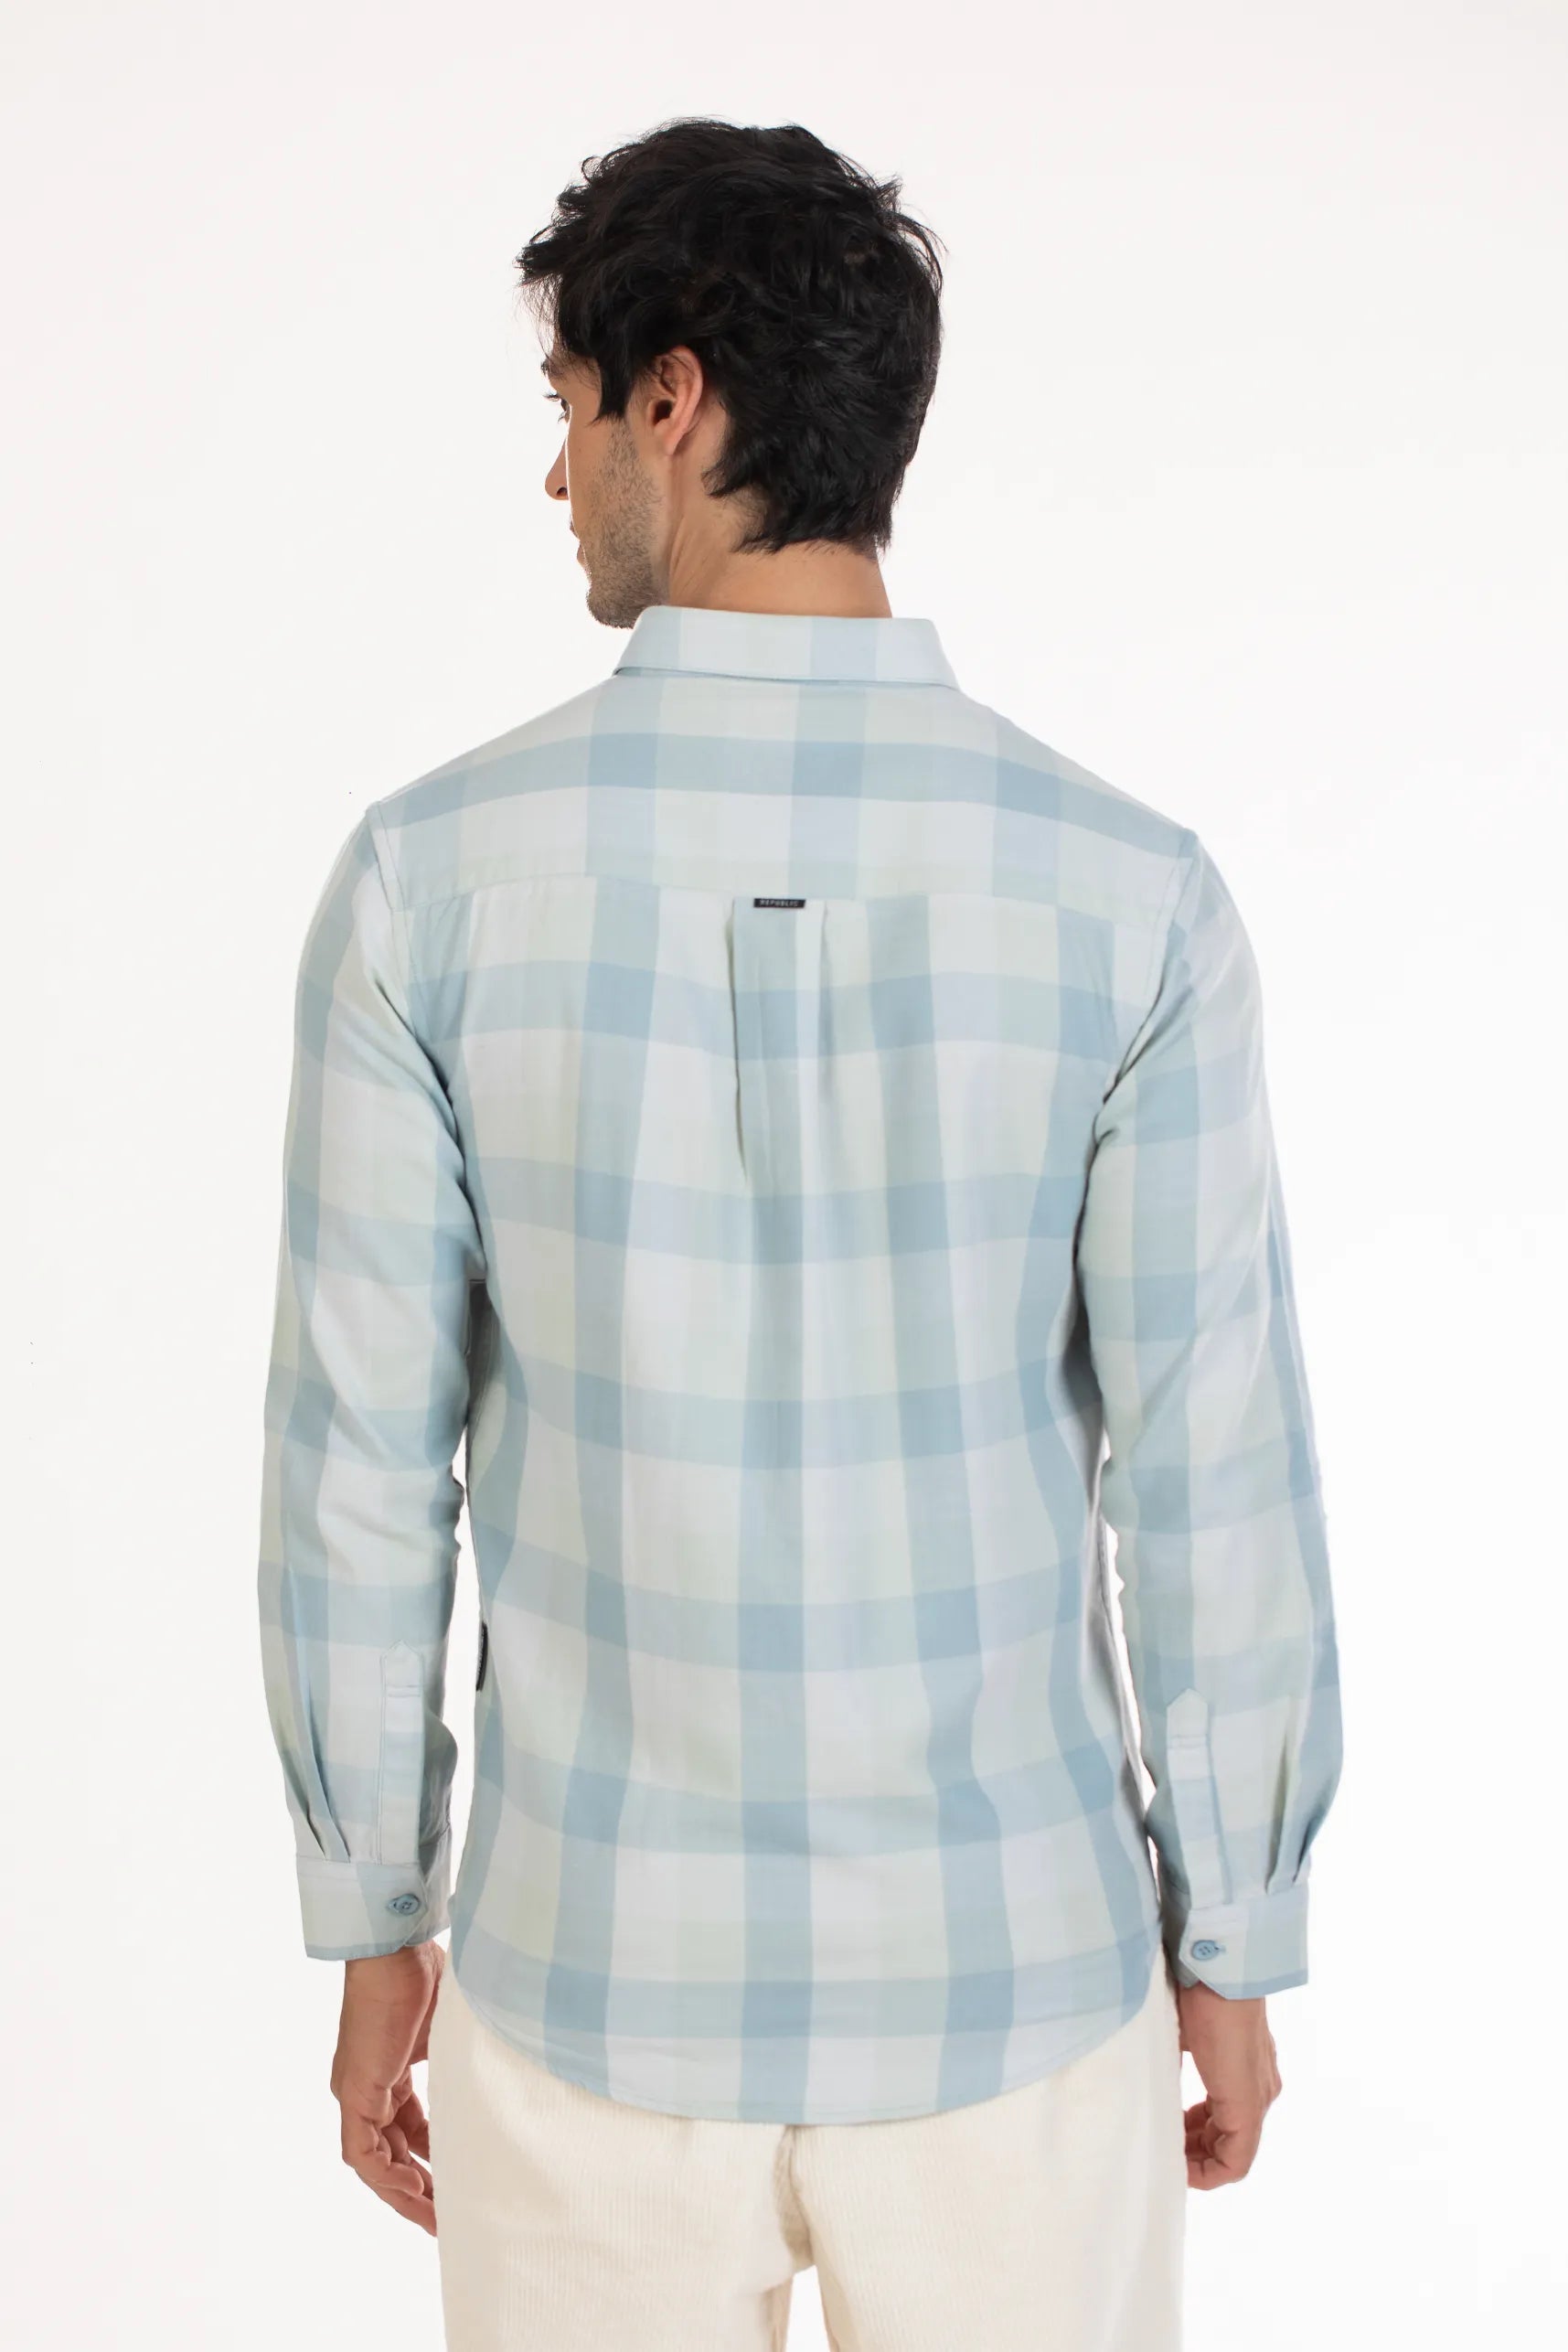 Buy Checkerboard Double Pocket Checks Shirt Online.